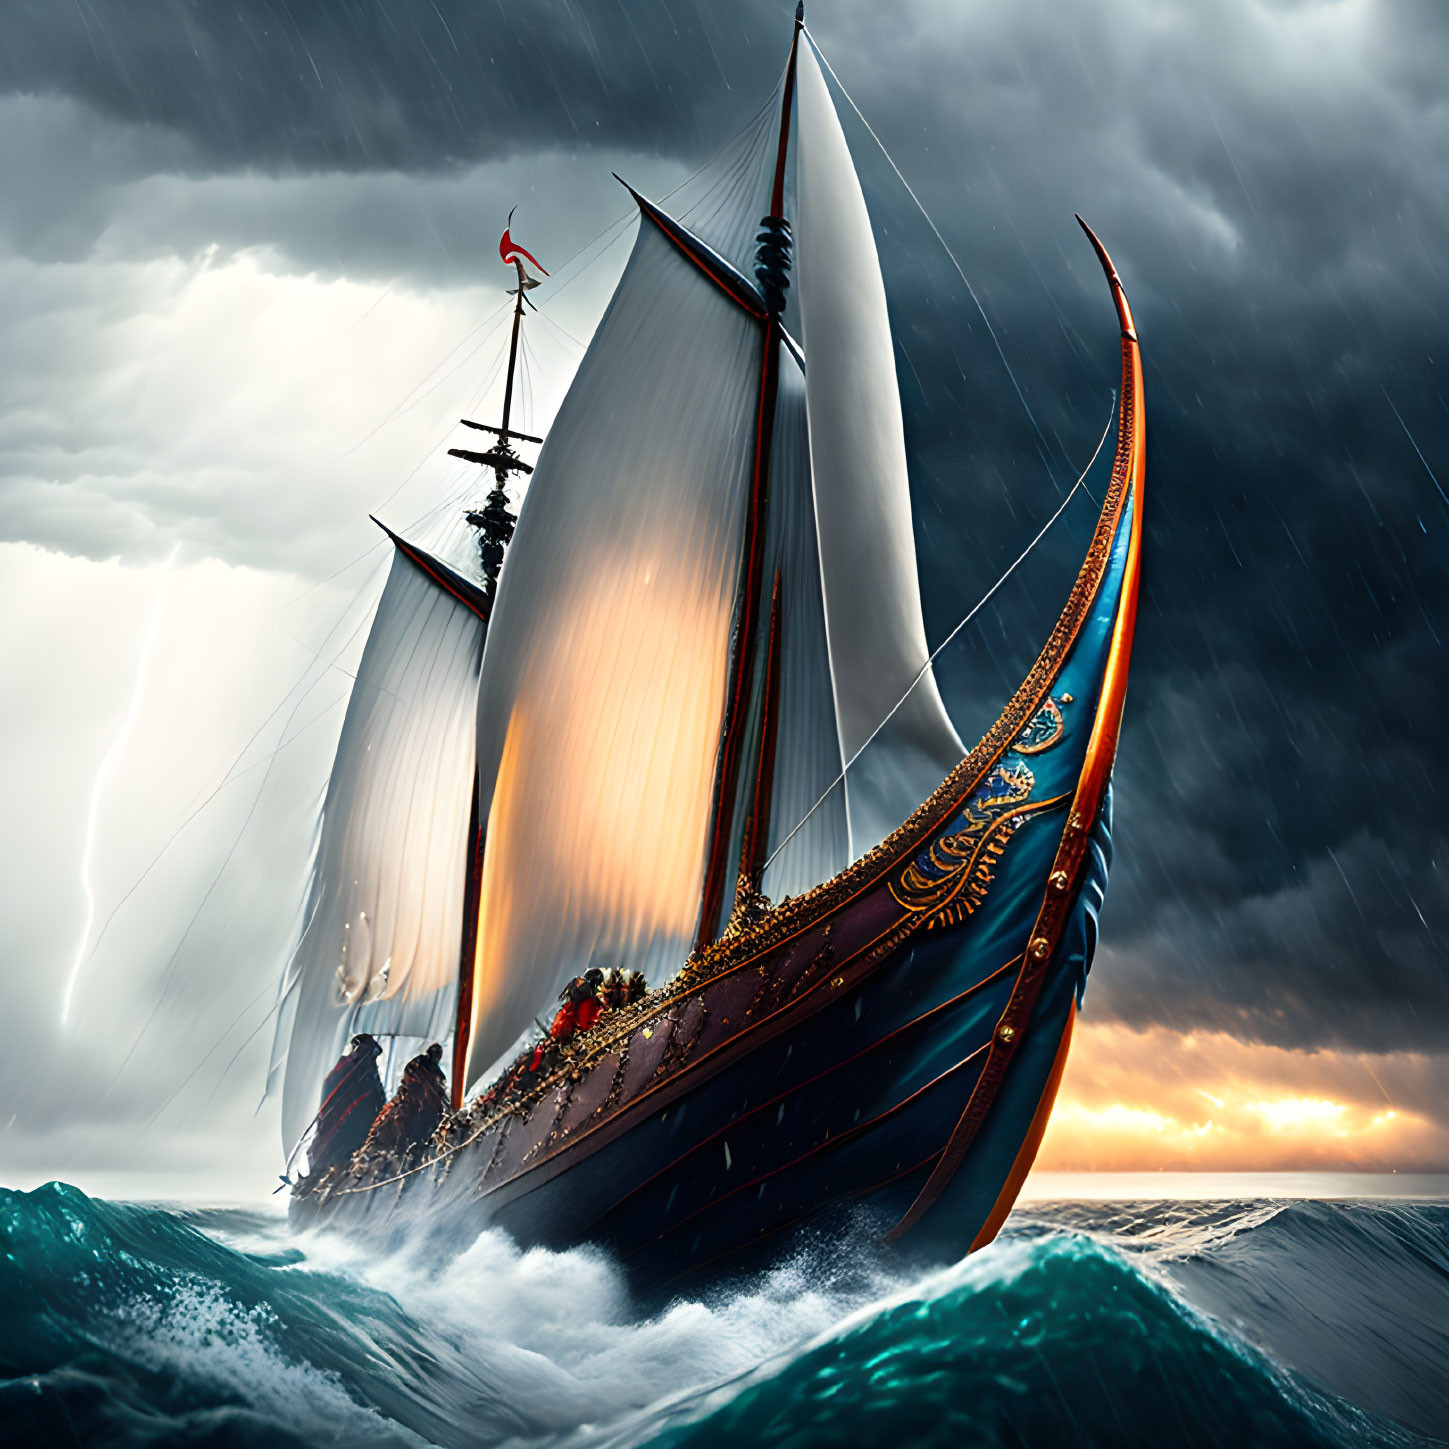 Ornate sailing ship navigating stormy seas under dramatic sky